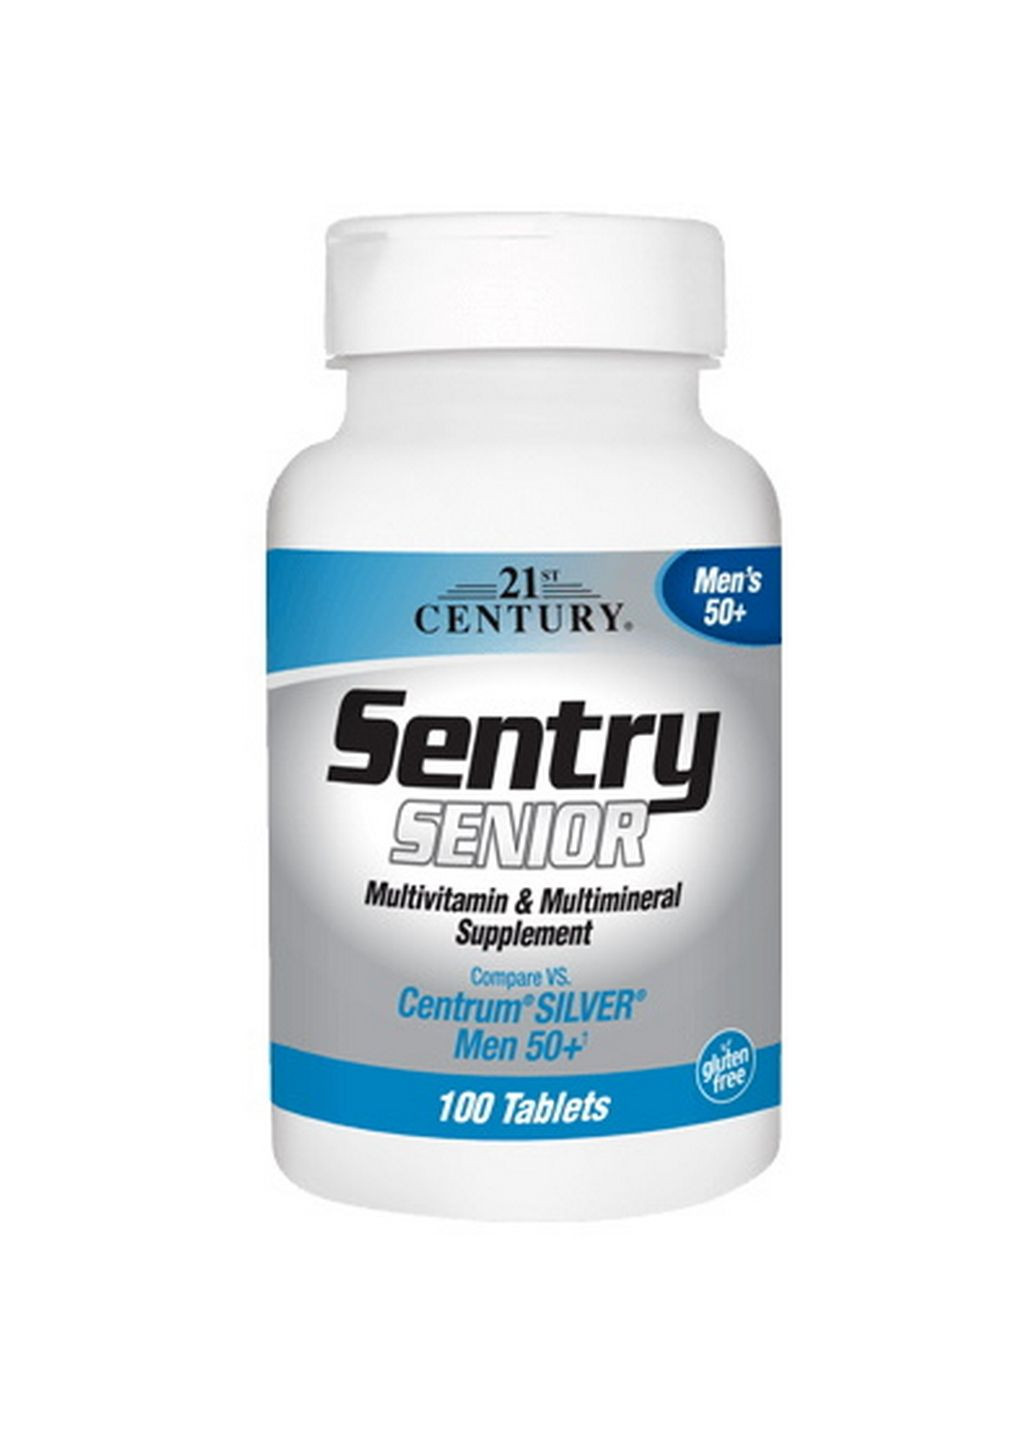 Витамины и минералы Sentry Senior Mens 50+, 100 таблеток 21st Century (293480382)